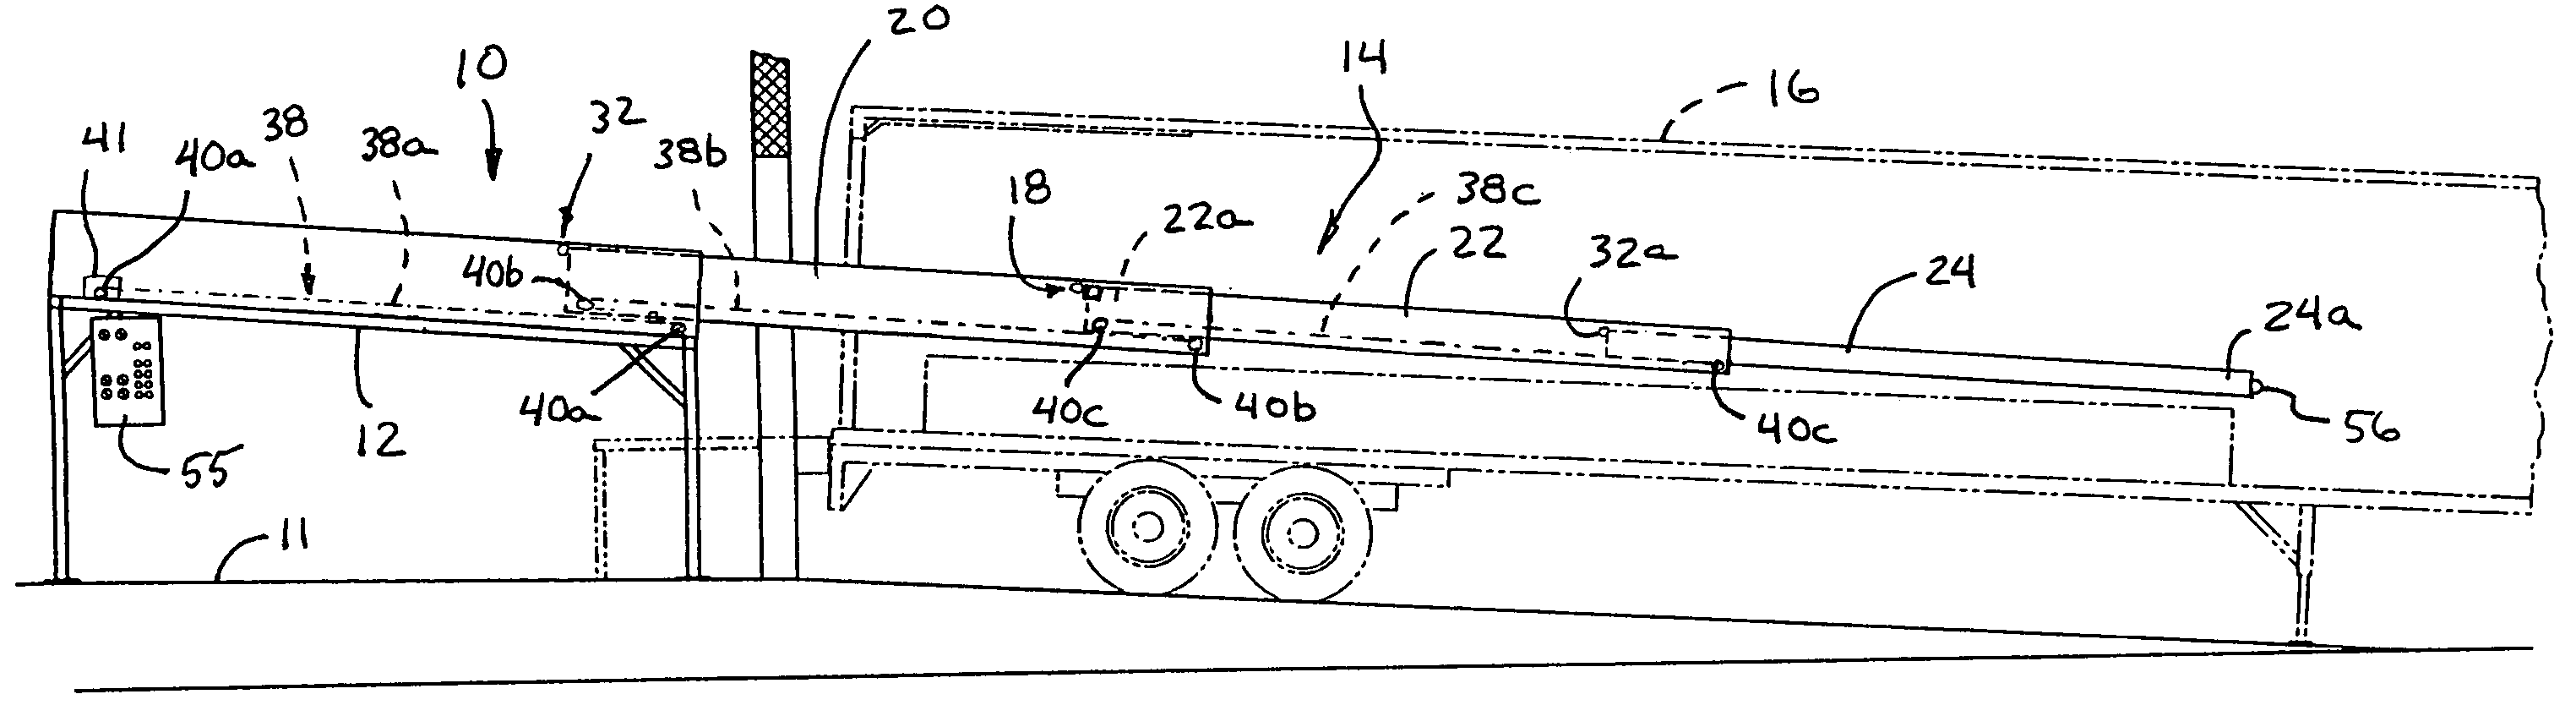 Extendable conveyor with boom brake